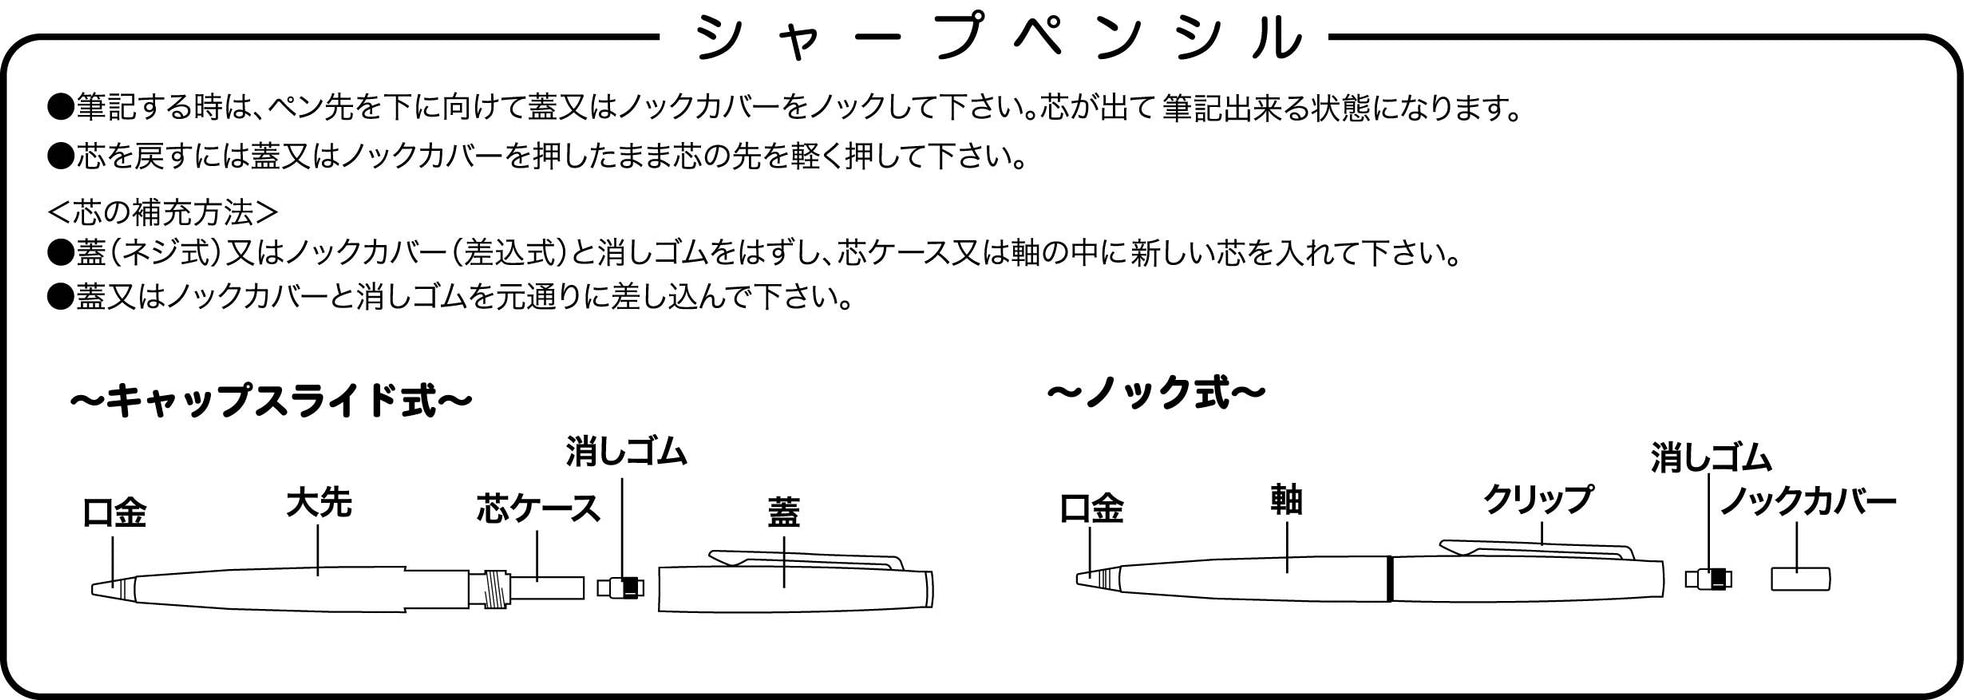 Sailor 筆 Procolor 300 自動鉛筆 Hoshikuzu 0.5 HB Shikisai 型號 21-0305-549